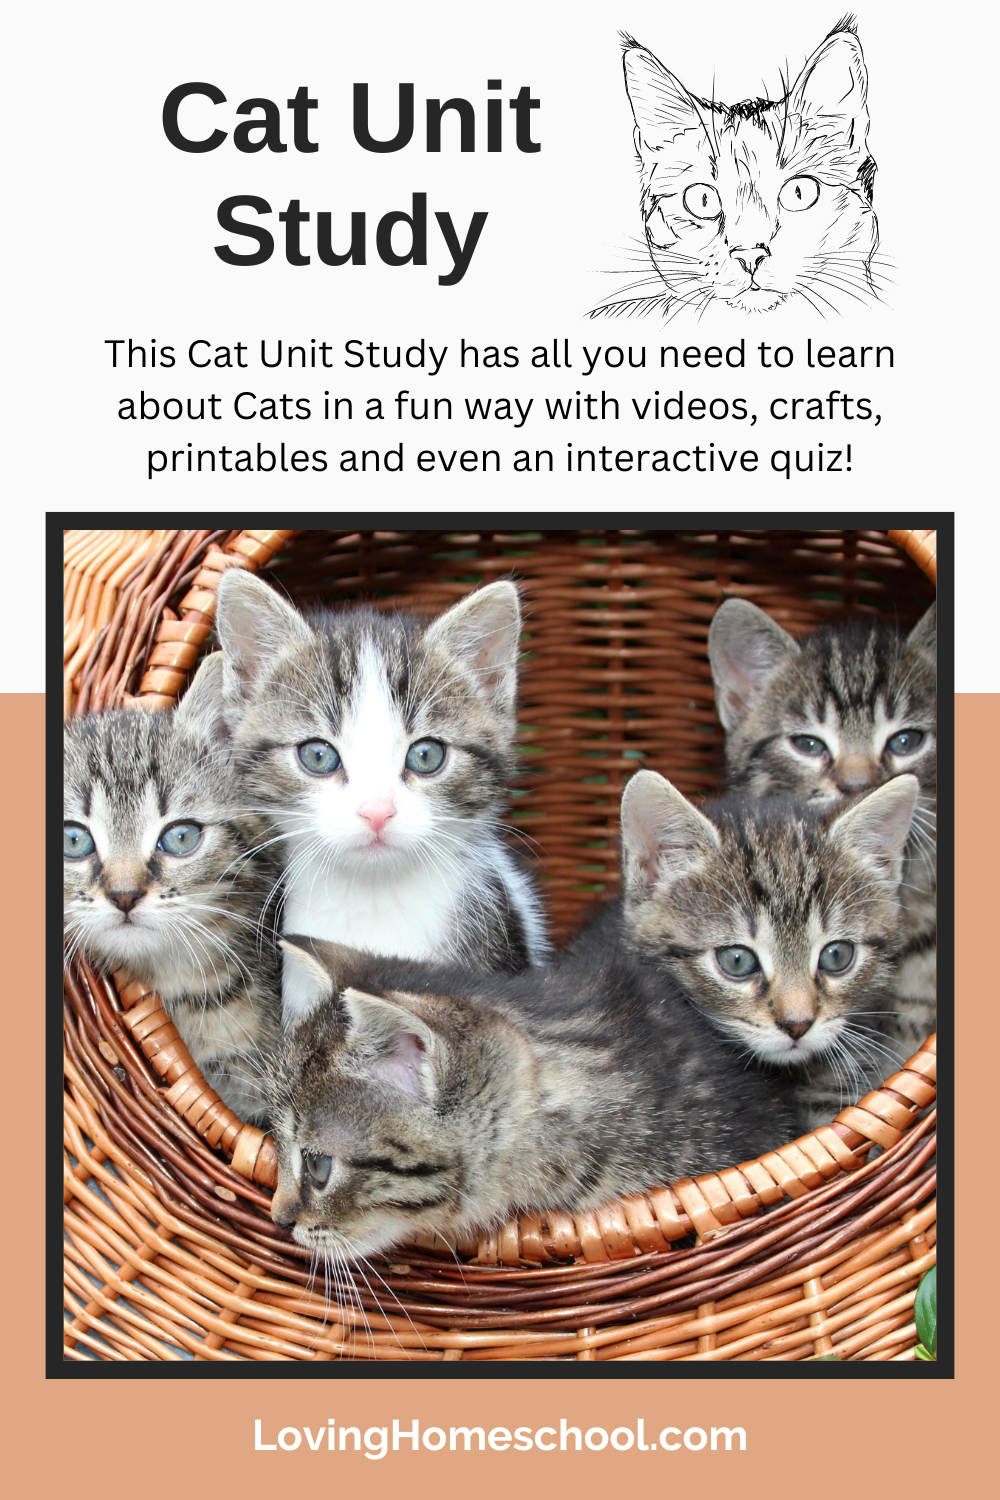 Cat Unit Study Pinterest Pin